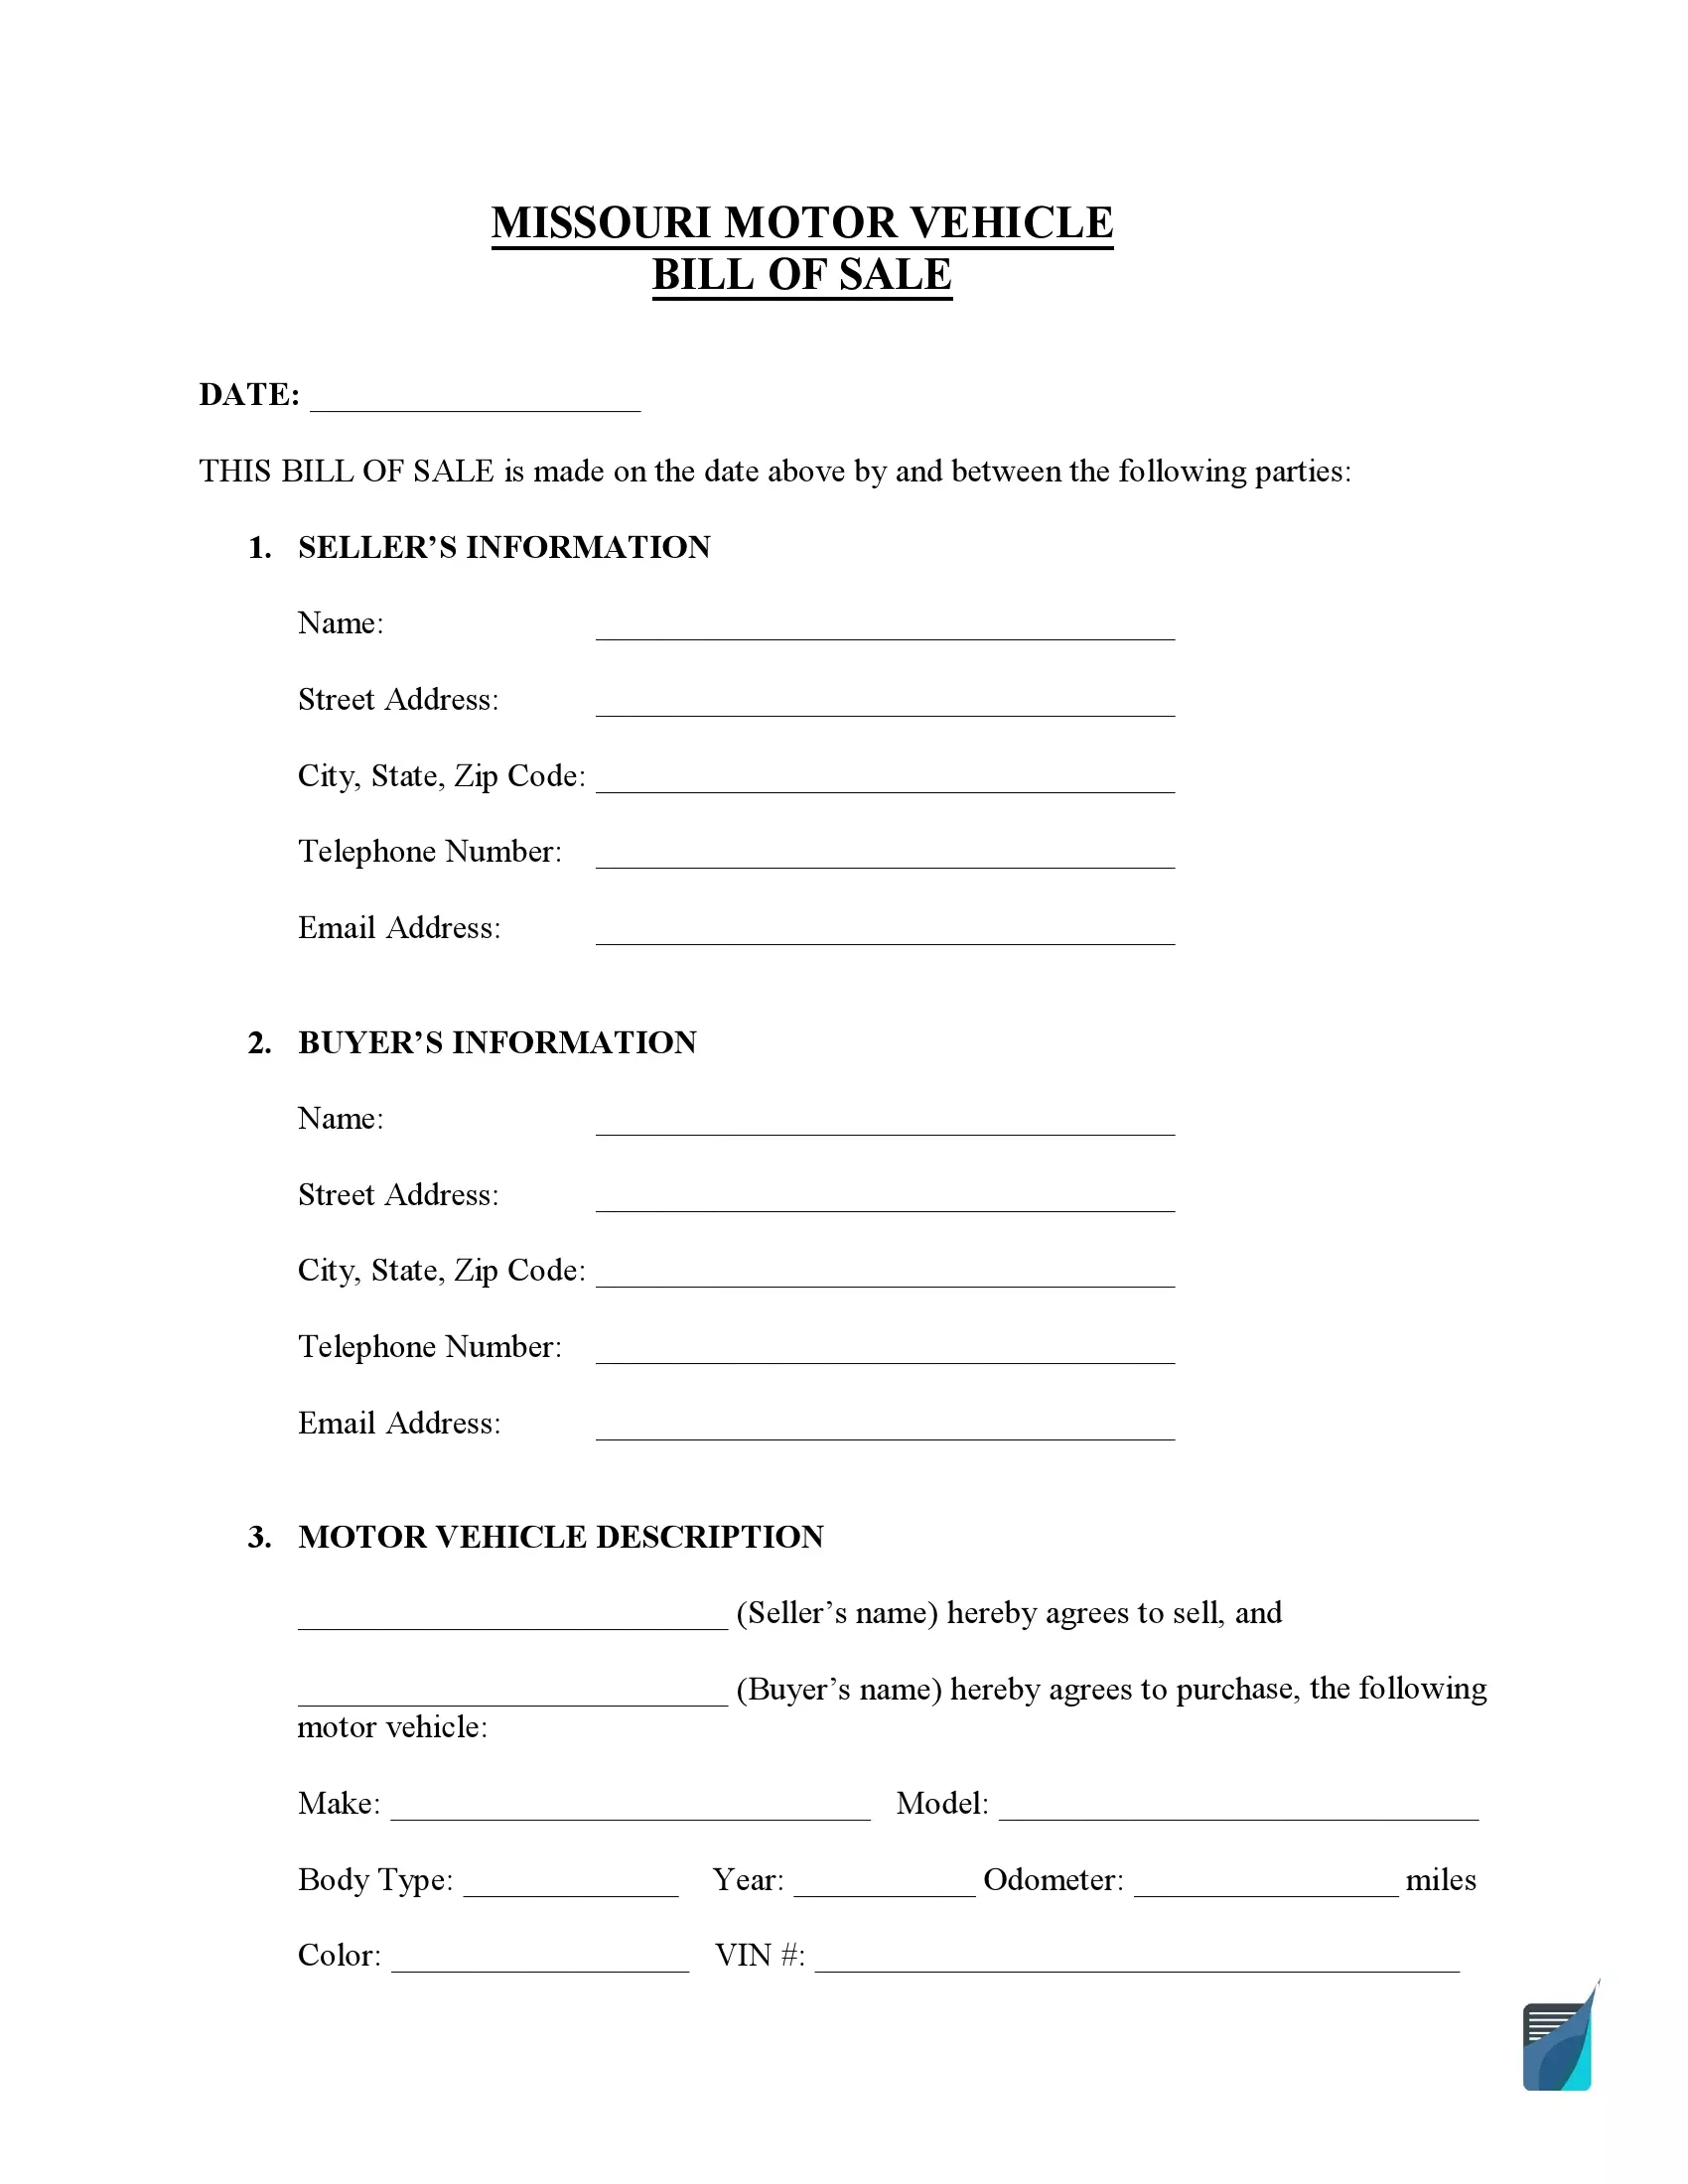 Missouri motor vehicle bill of sale template